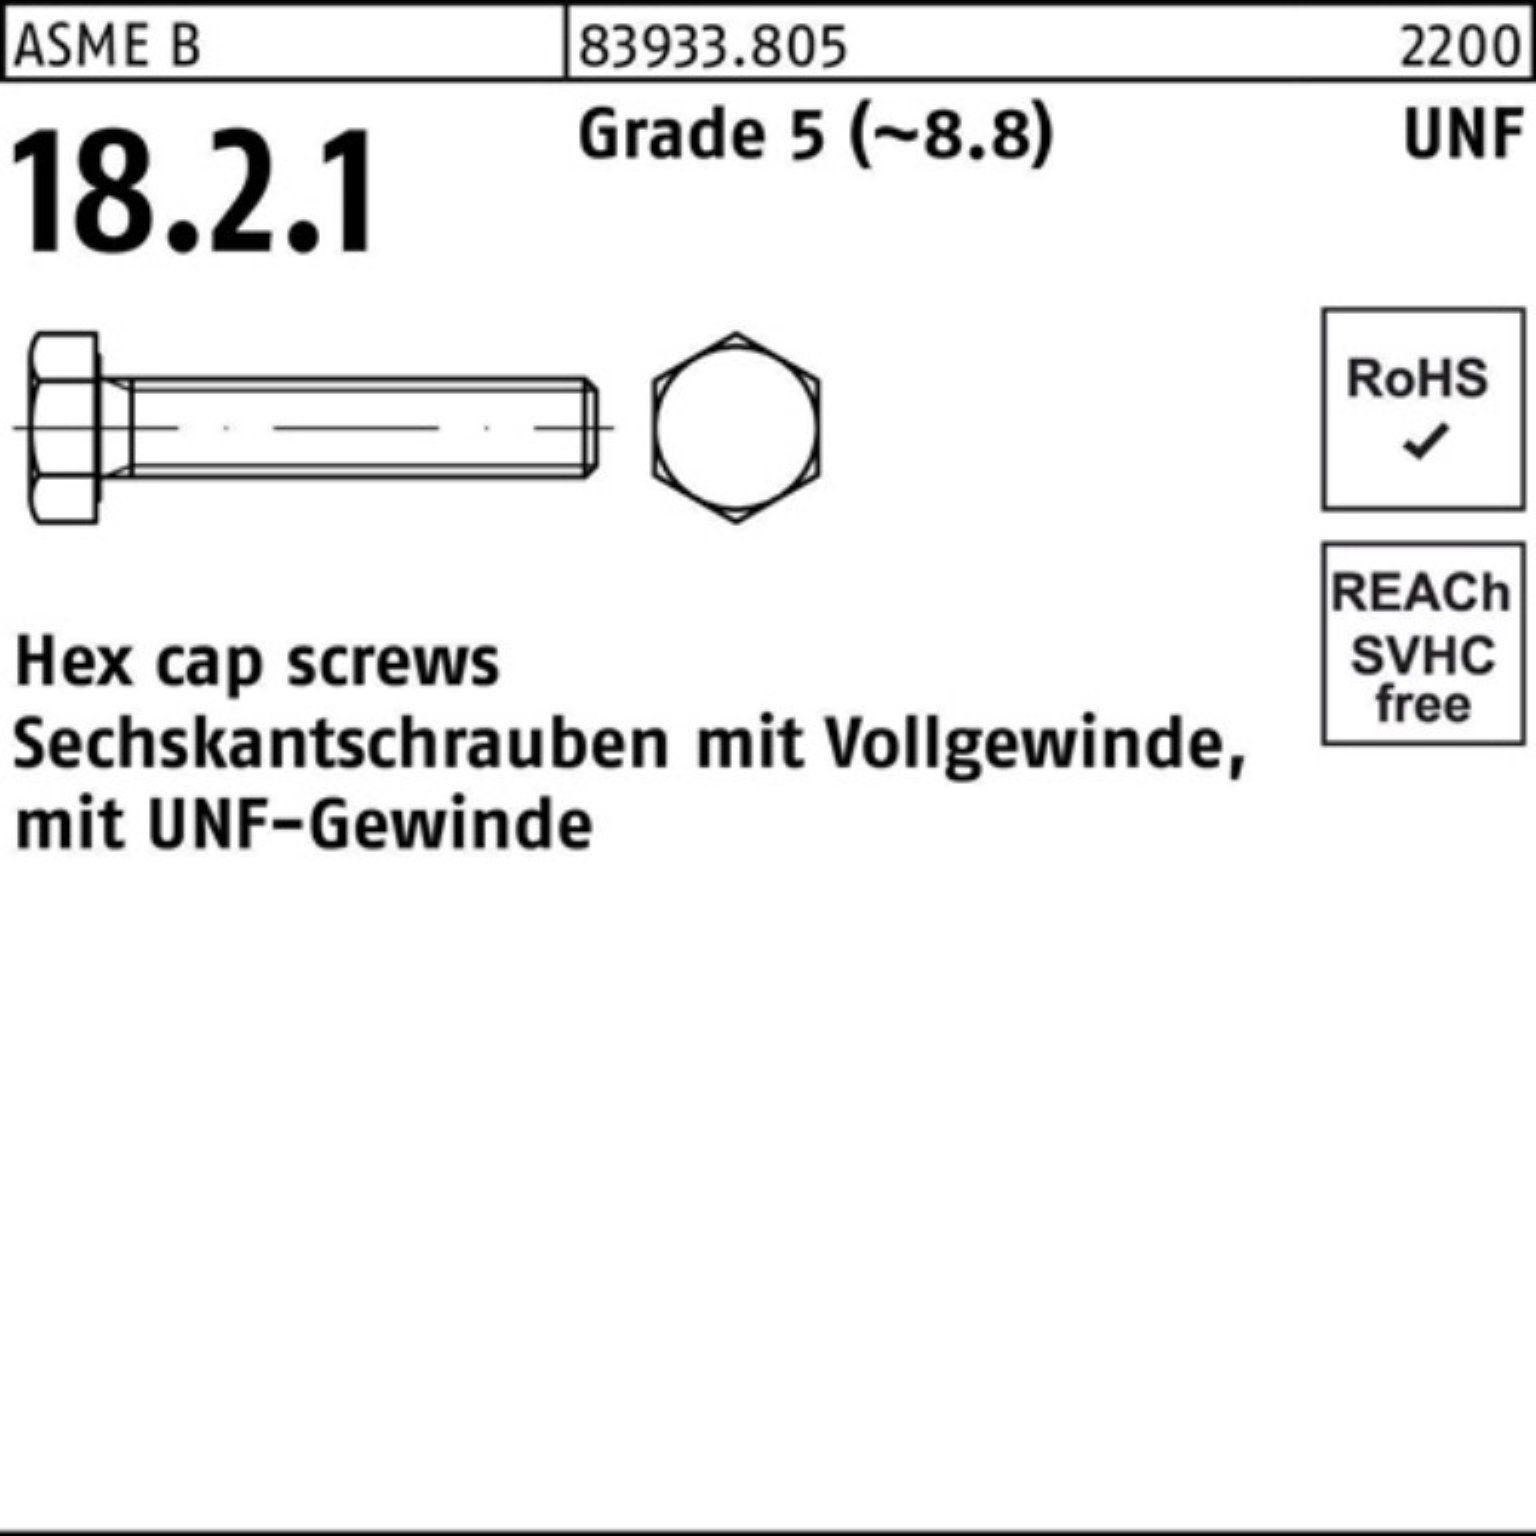 Reyher Sechskantschraube 100er VG 7/16x 83933 R Sechskantschraube Grade Pack 1/4 UNF-Gewinde 1